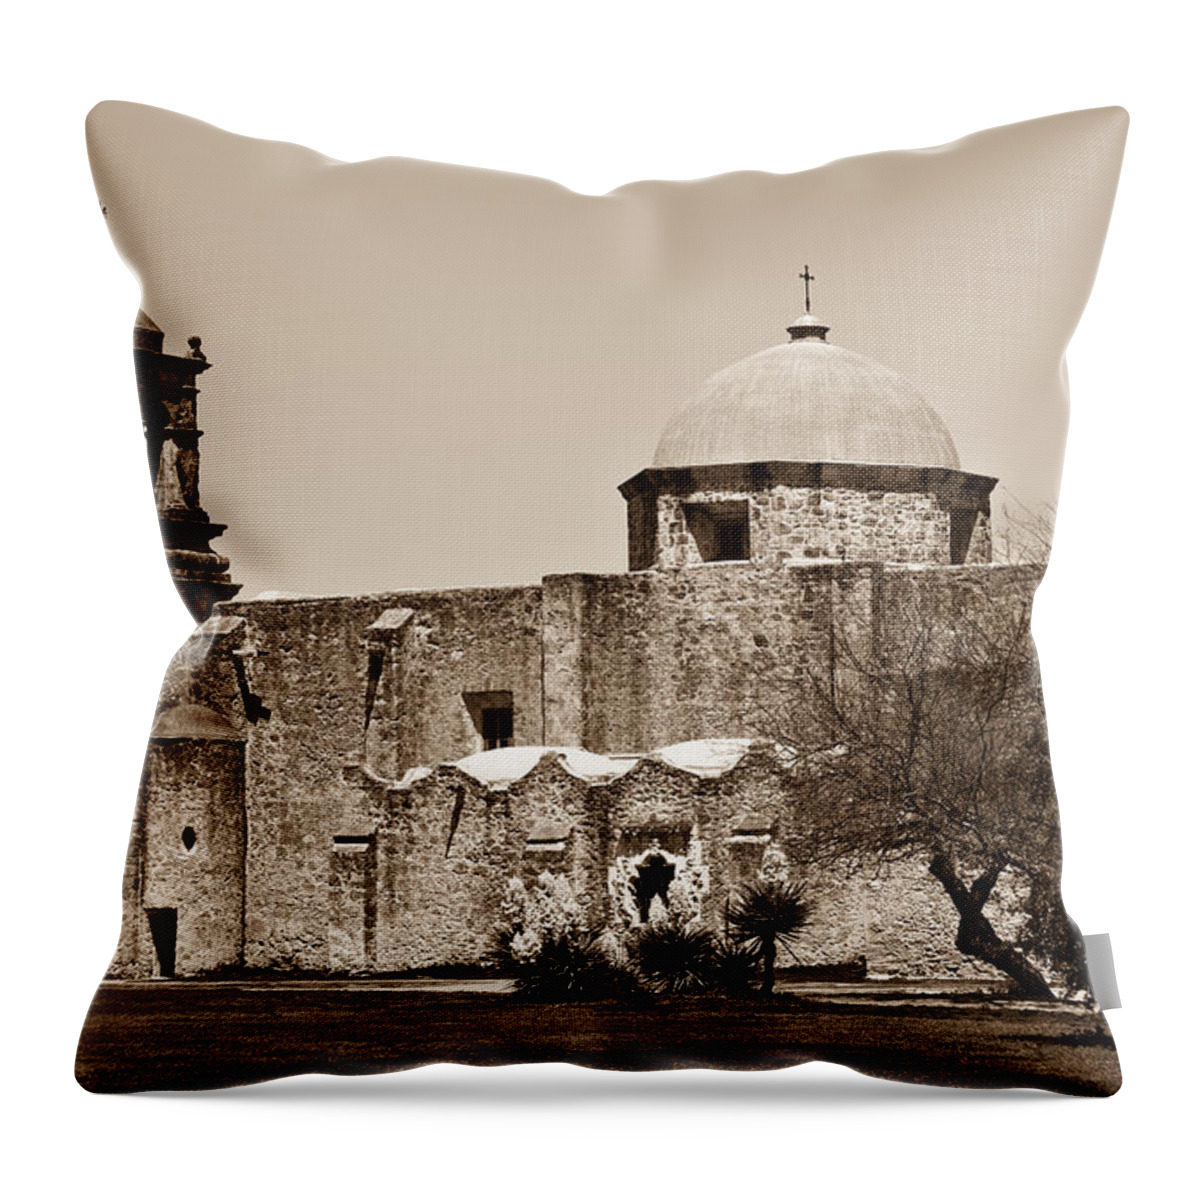 San Antonio Throw Pillow featuring the photograph San Antonio by Sebastian Musial